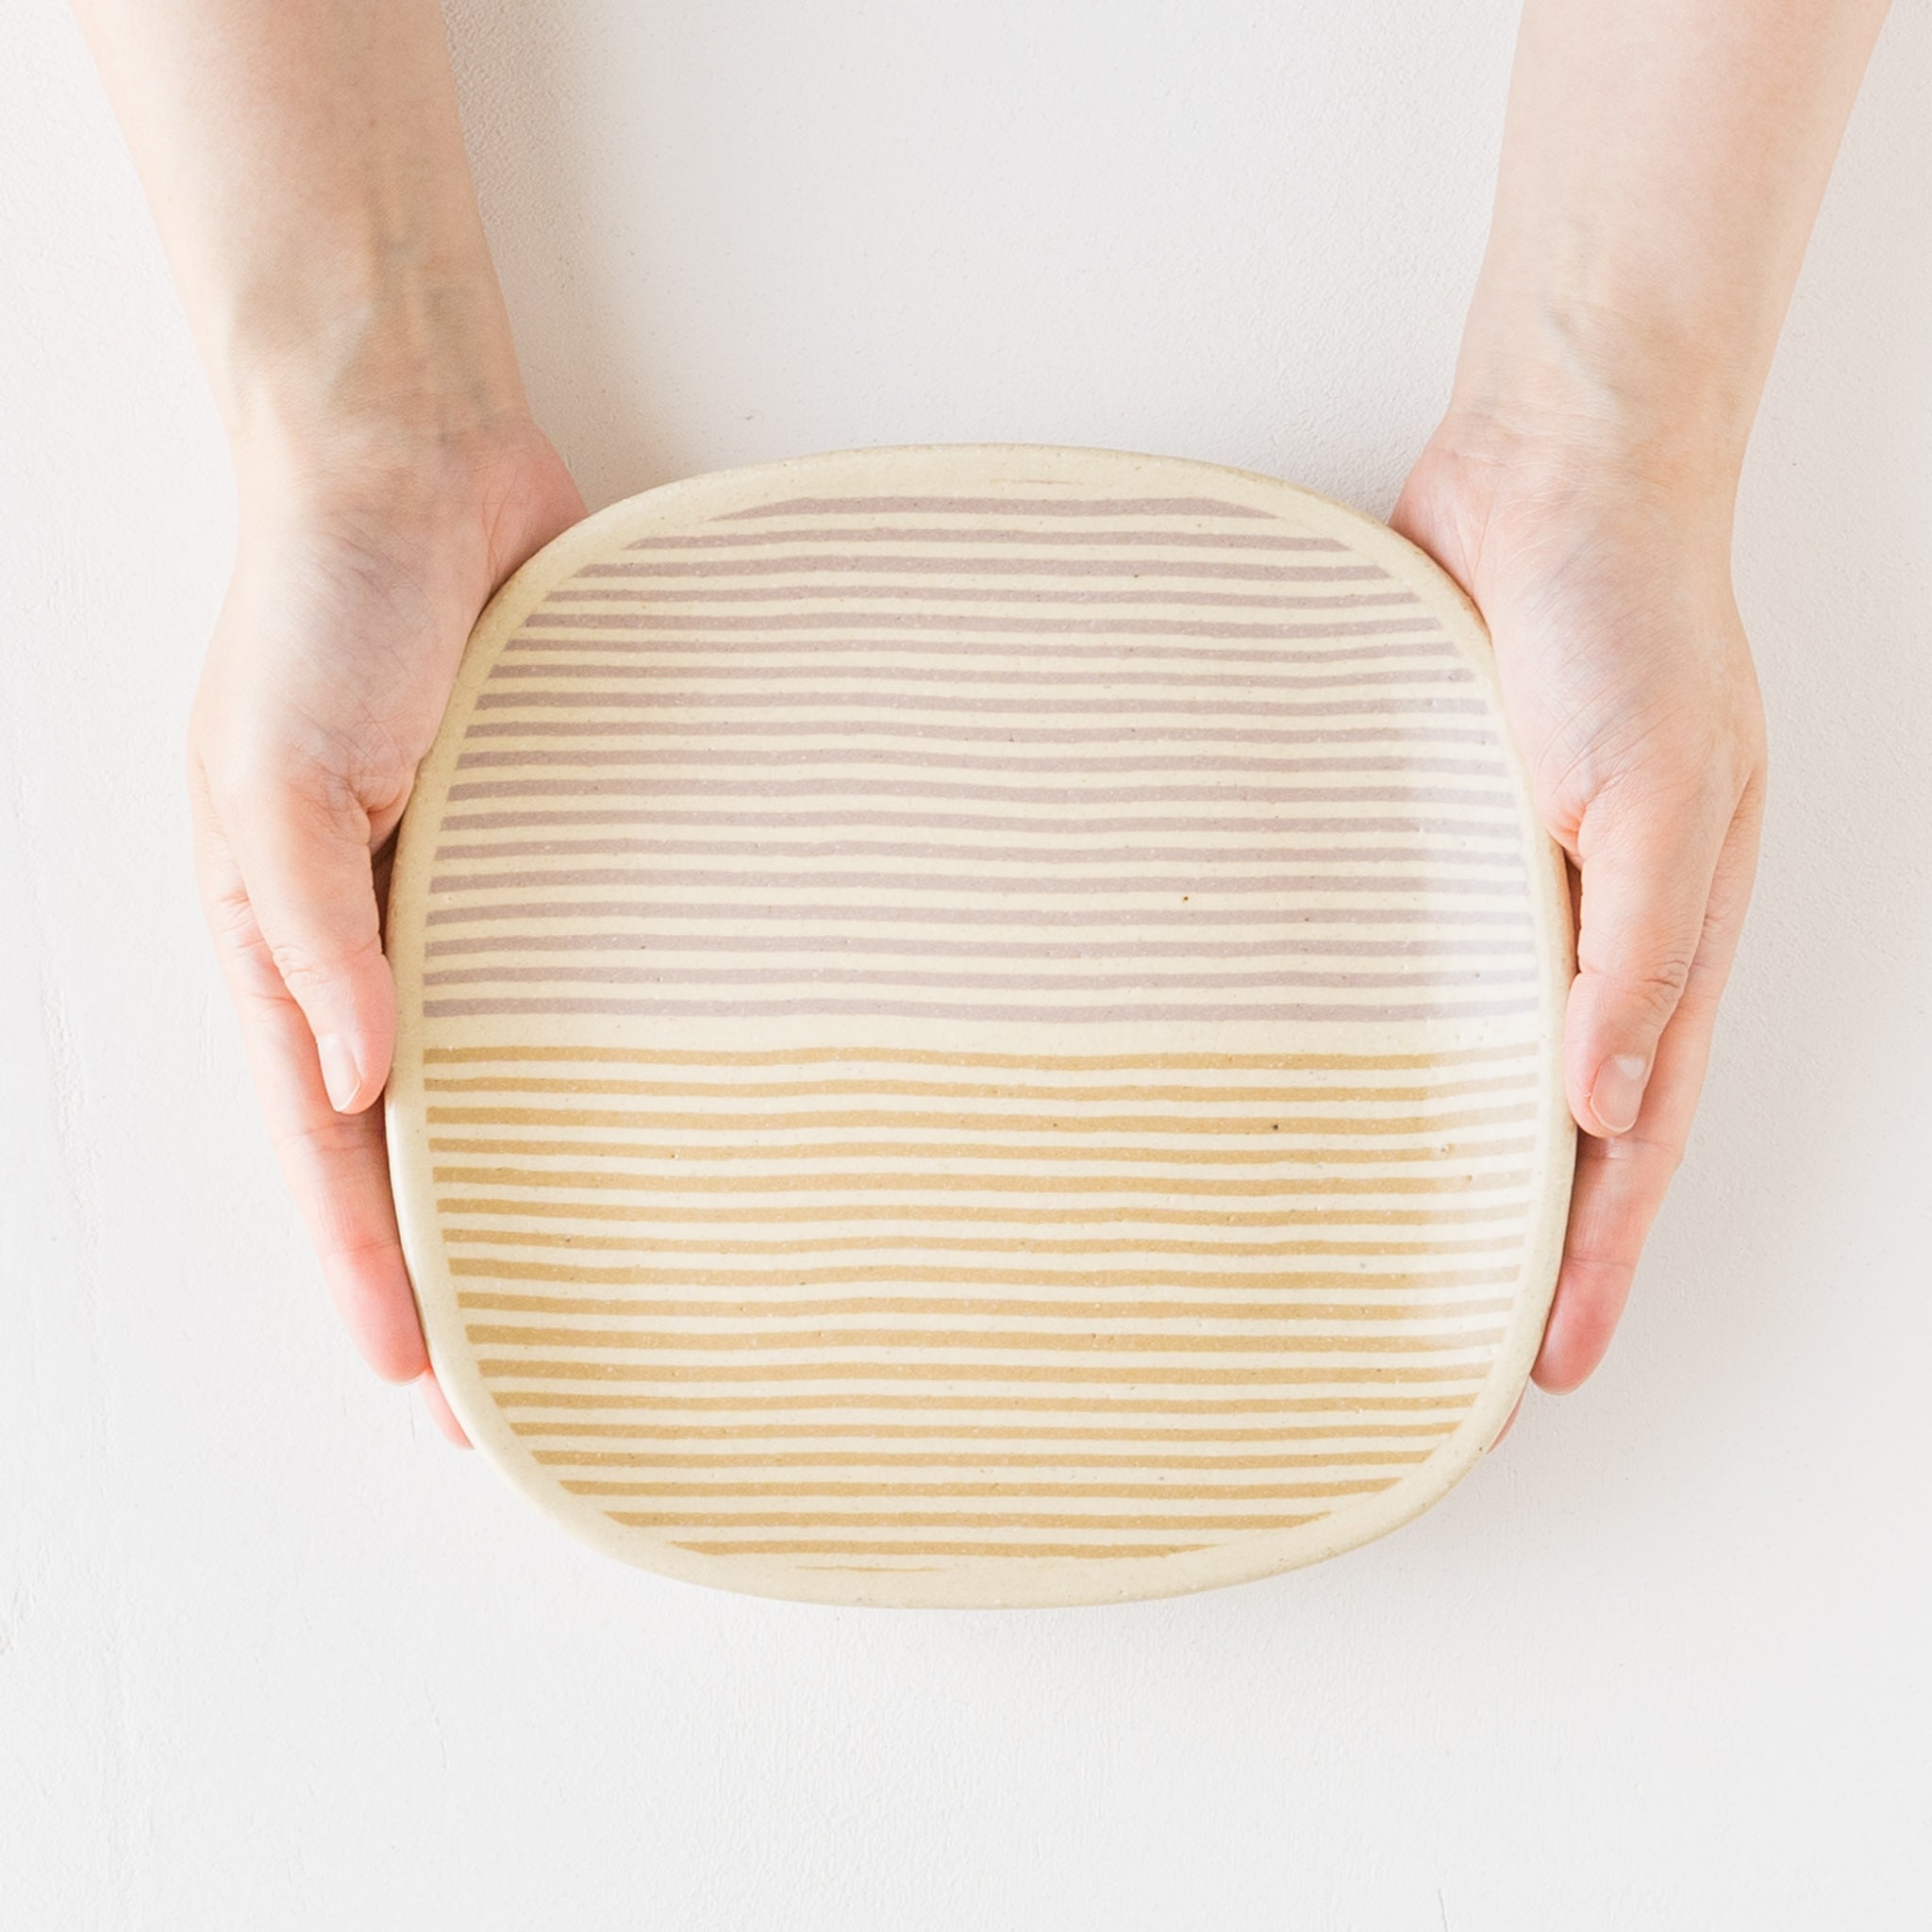 Hanako Sakashita's bread plate with cute striped pattern